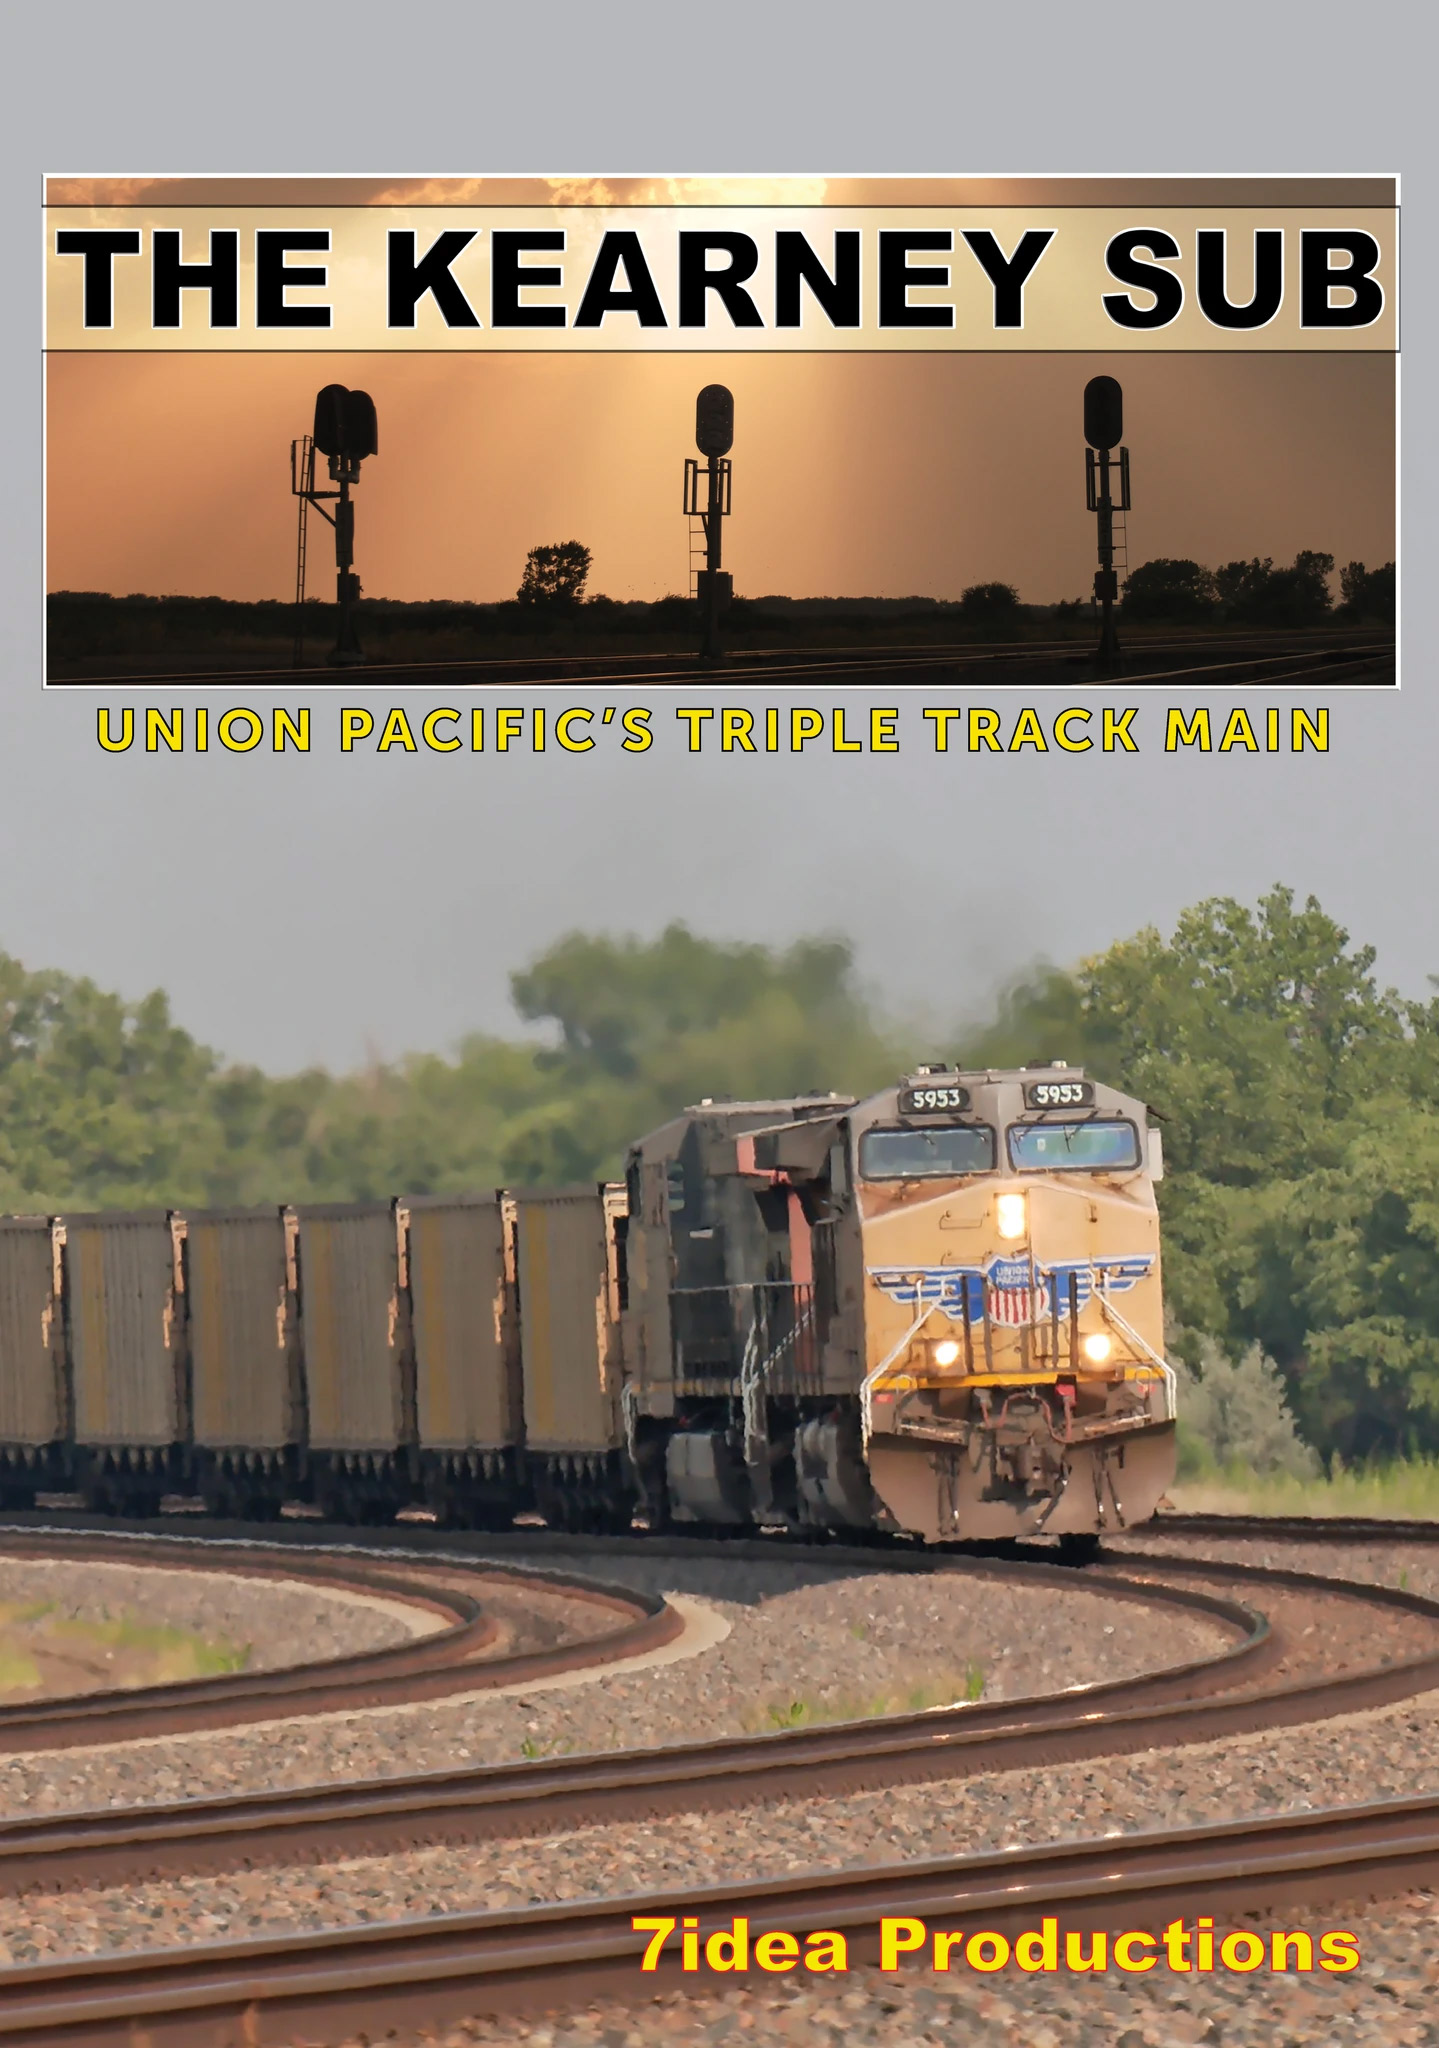 Union Pacifics Triple Track Main Kearney Sub DVD 7idea Productions 010062D 615855600321